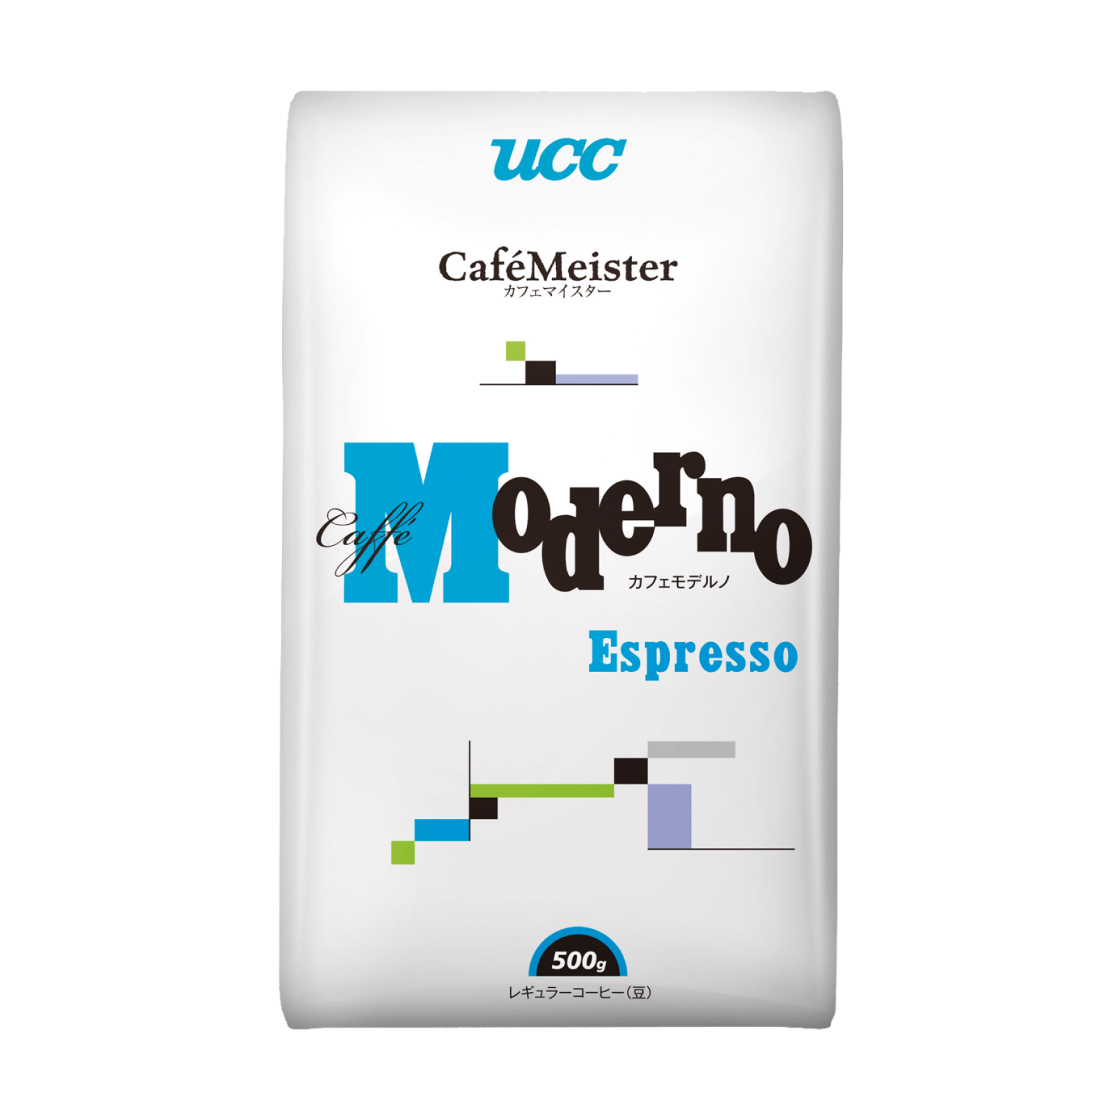 CaféMeister | 業務用コーヒー | UCCコーヒープロフェッショナル株式会社